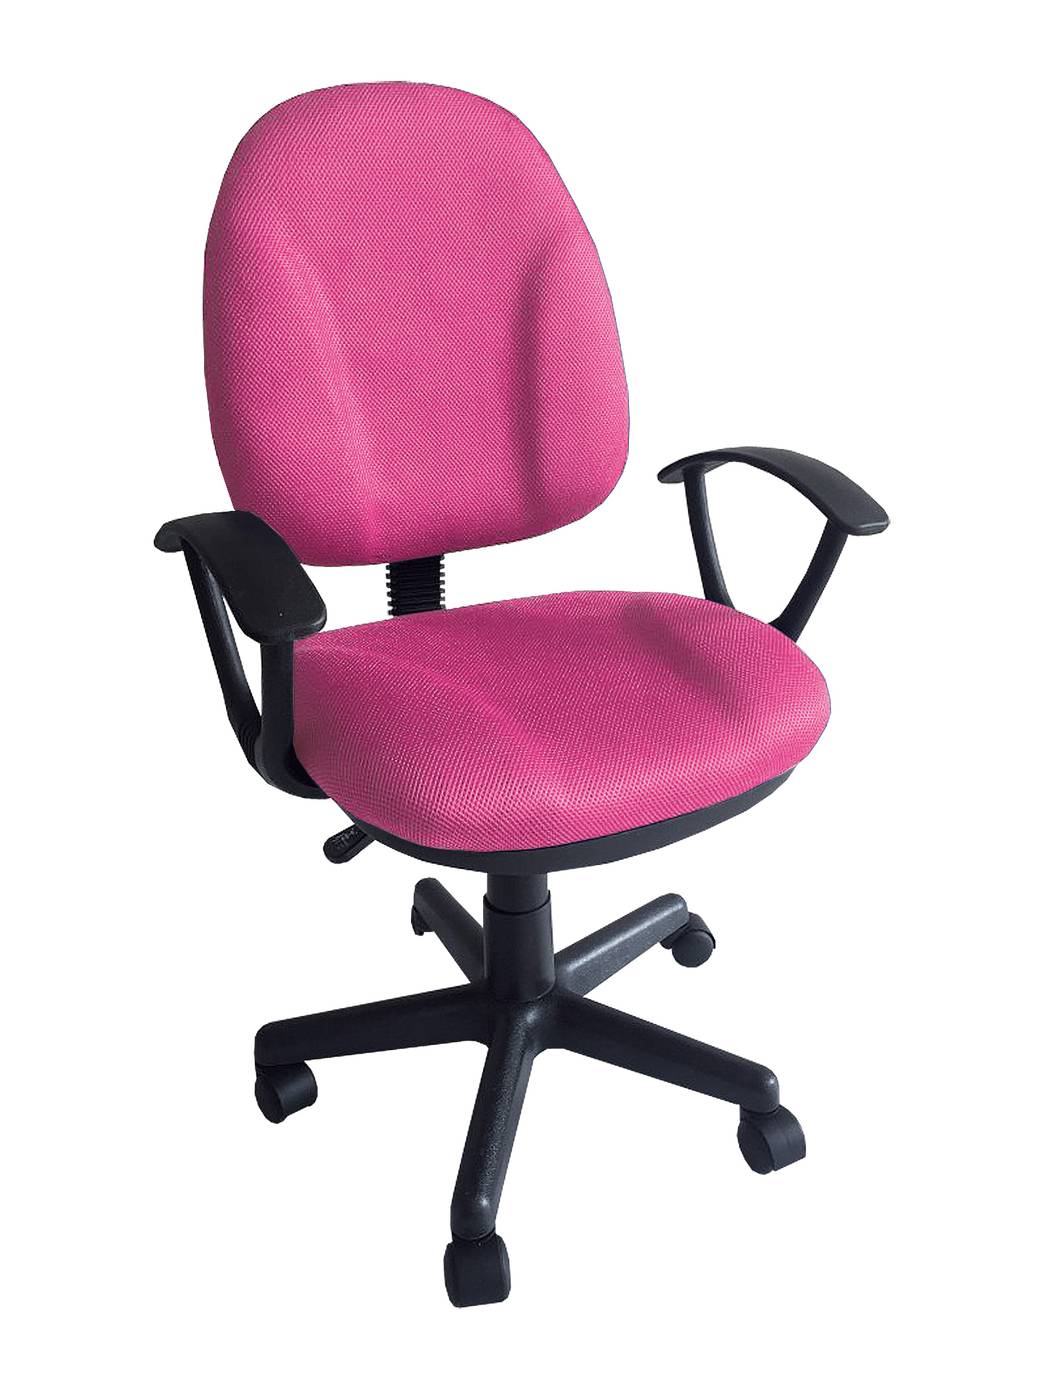 Silla giratoria para escritorio juvenil, con ruedas, elevable, con asiento y respaldo tapizado con tejido 3D color fucsia